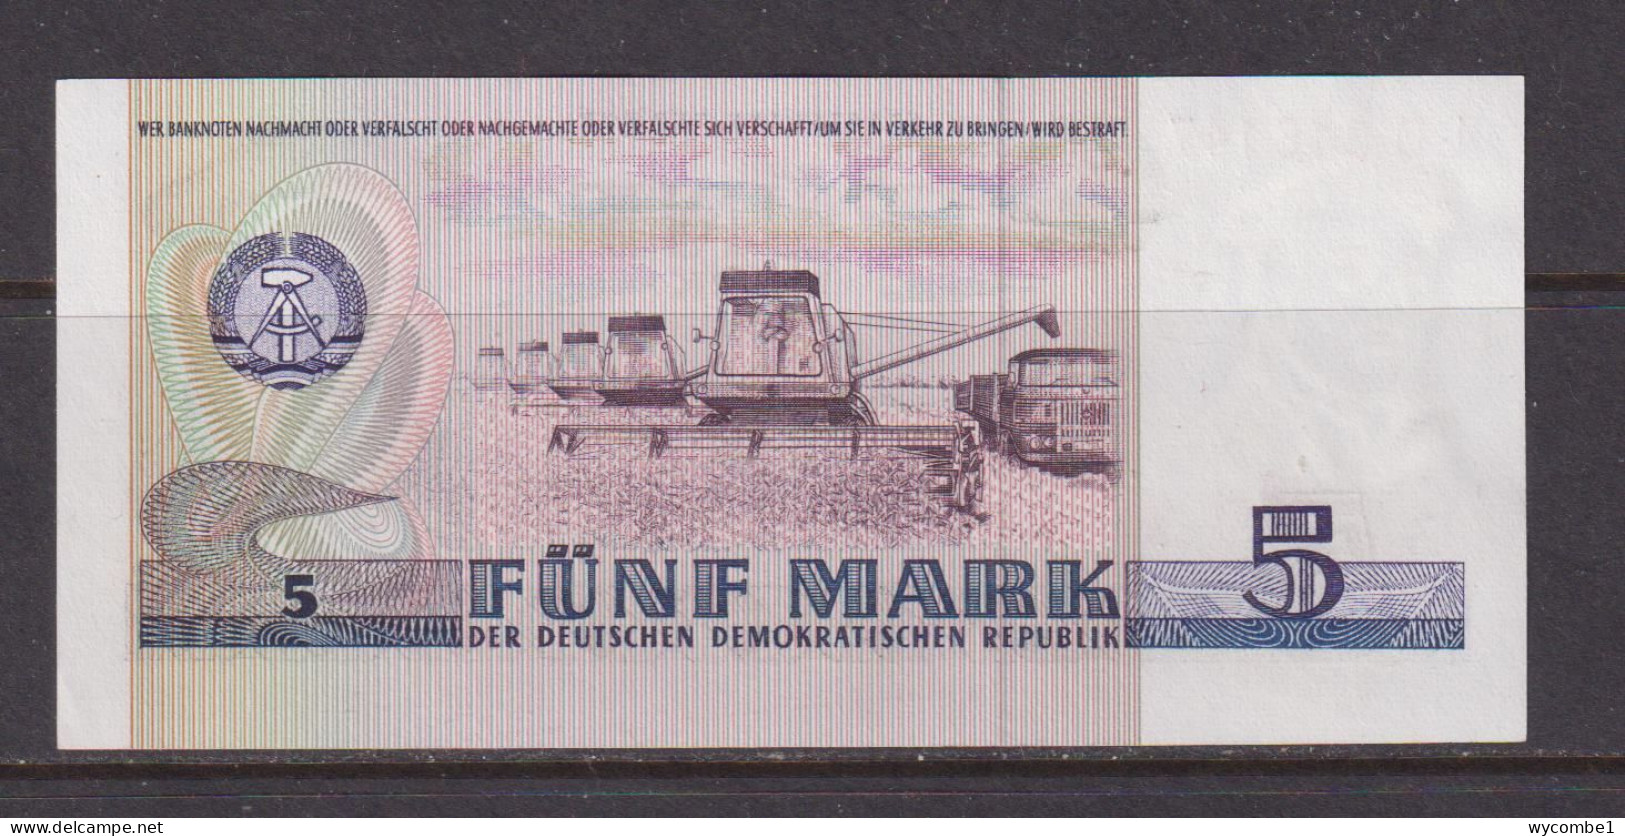 EAST GERMANY -  1975 5 Mark UNC/aUNC  Banknote - 5 Mark